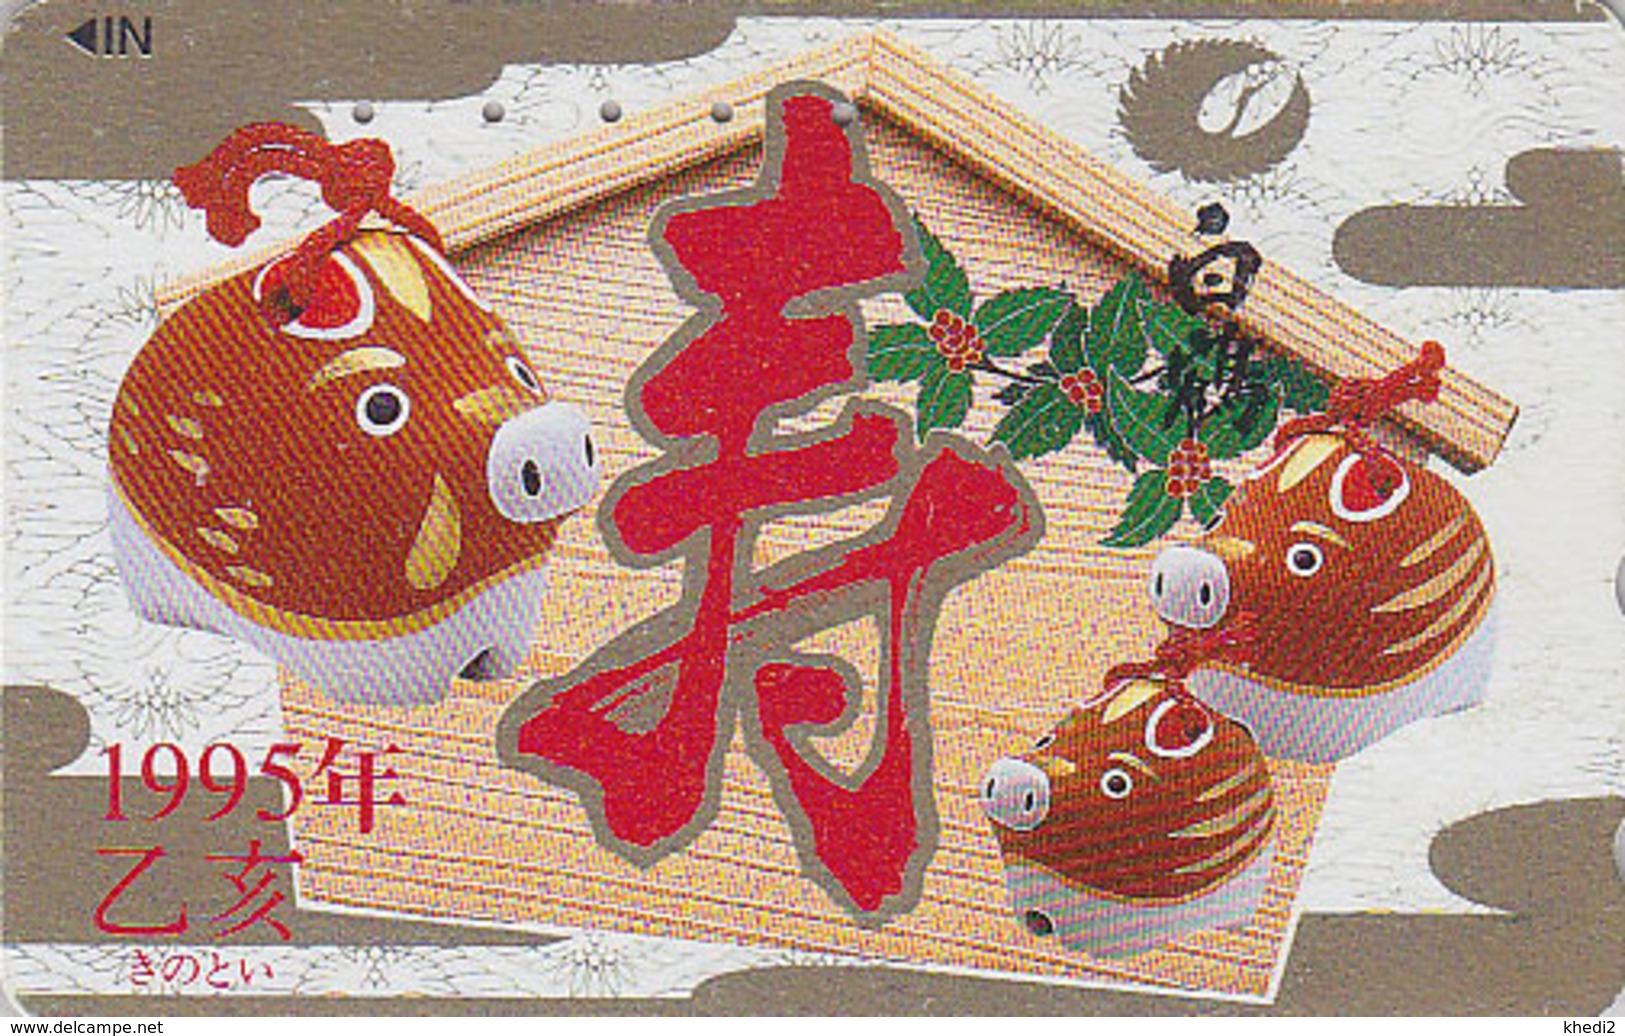 Télécarte Japon / 110-011 - ZODIAQUE - Animal - SANGLIER 1995 - BOAR  HOROSCOPE Japan Phonecard - 1039 - Zodiaque